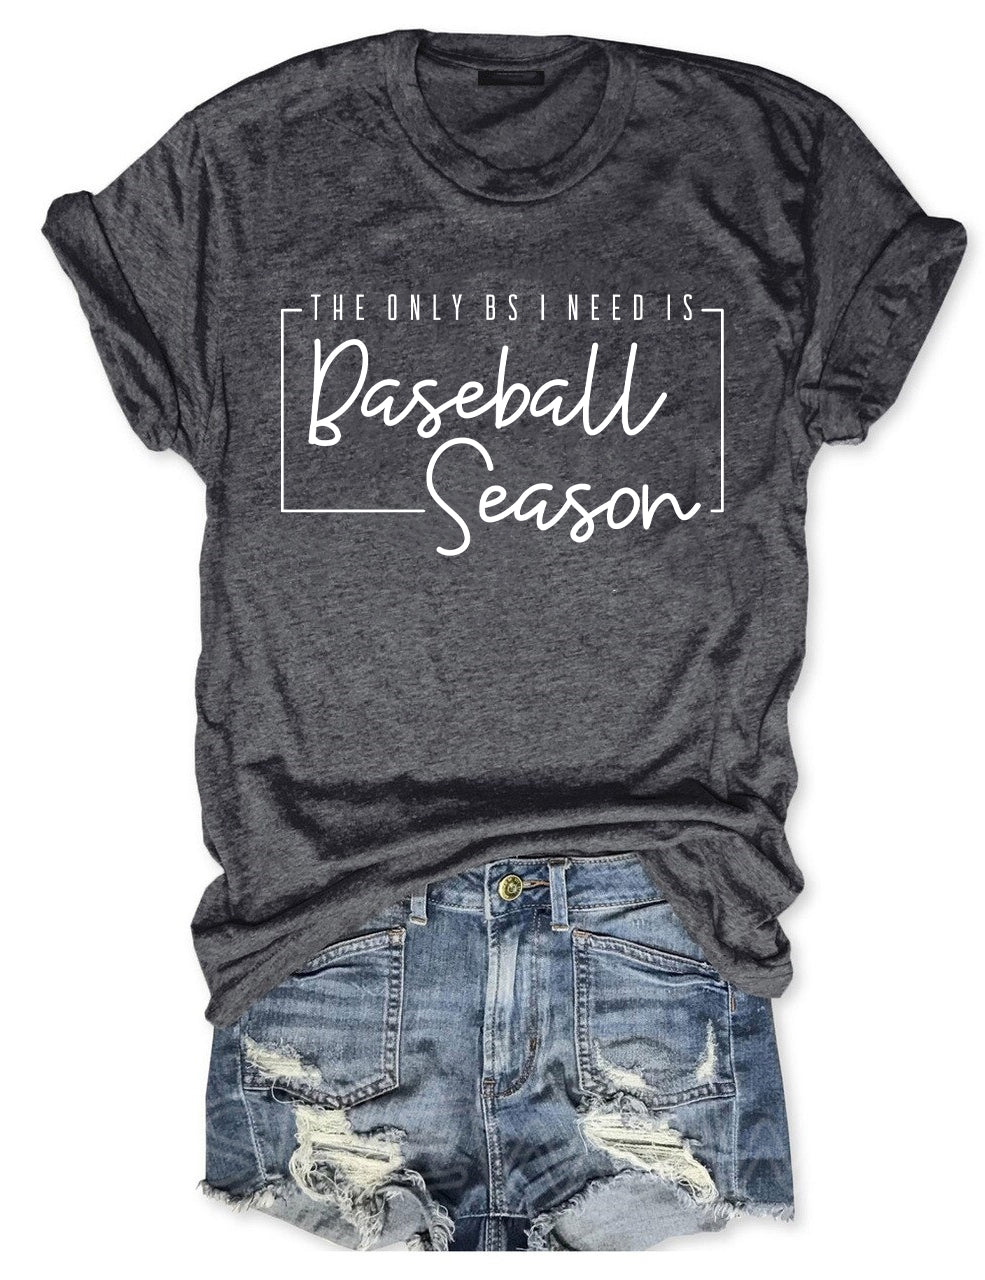 The Only BS I Need Is Baseball Season T-shirt